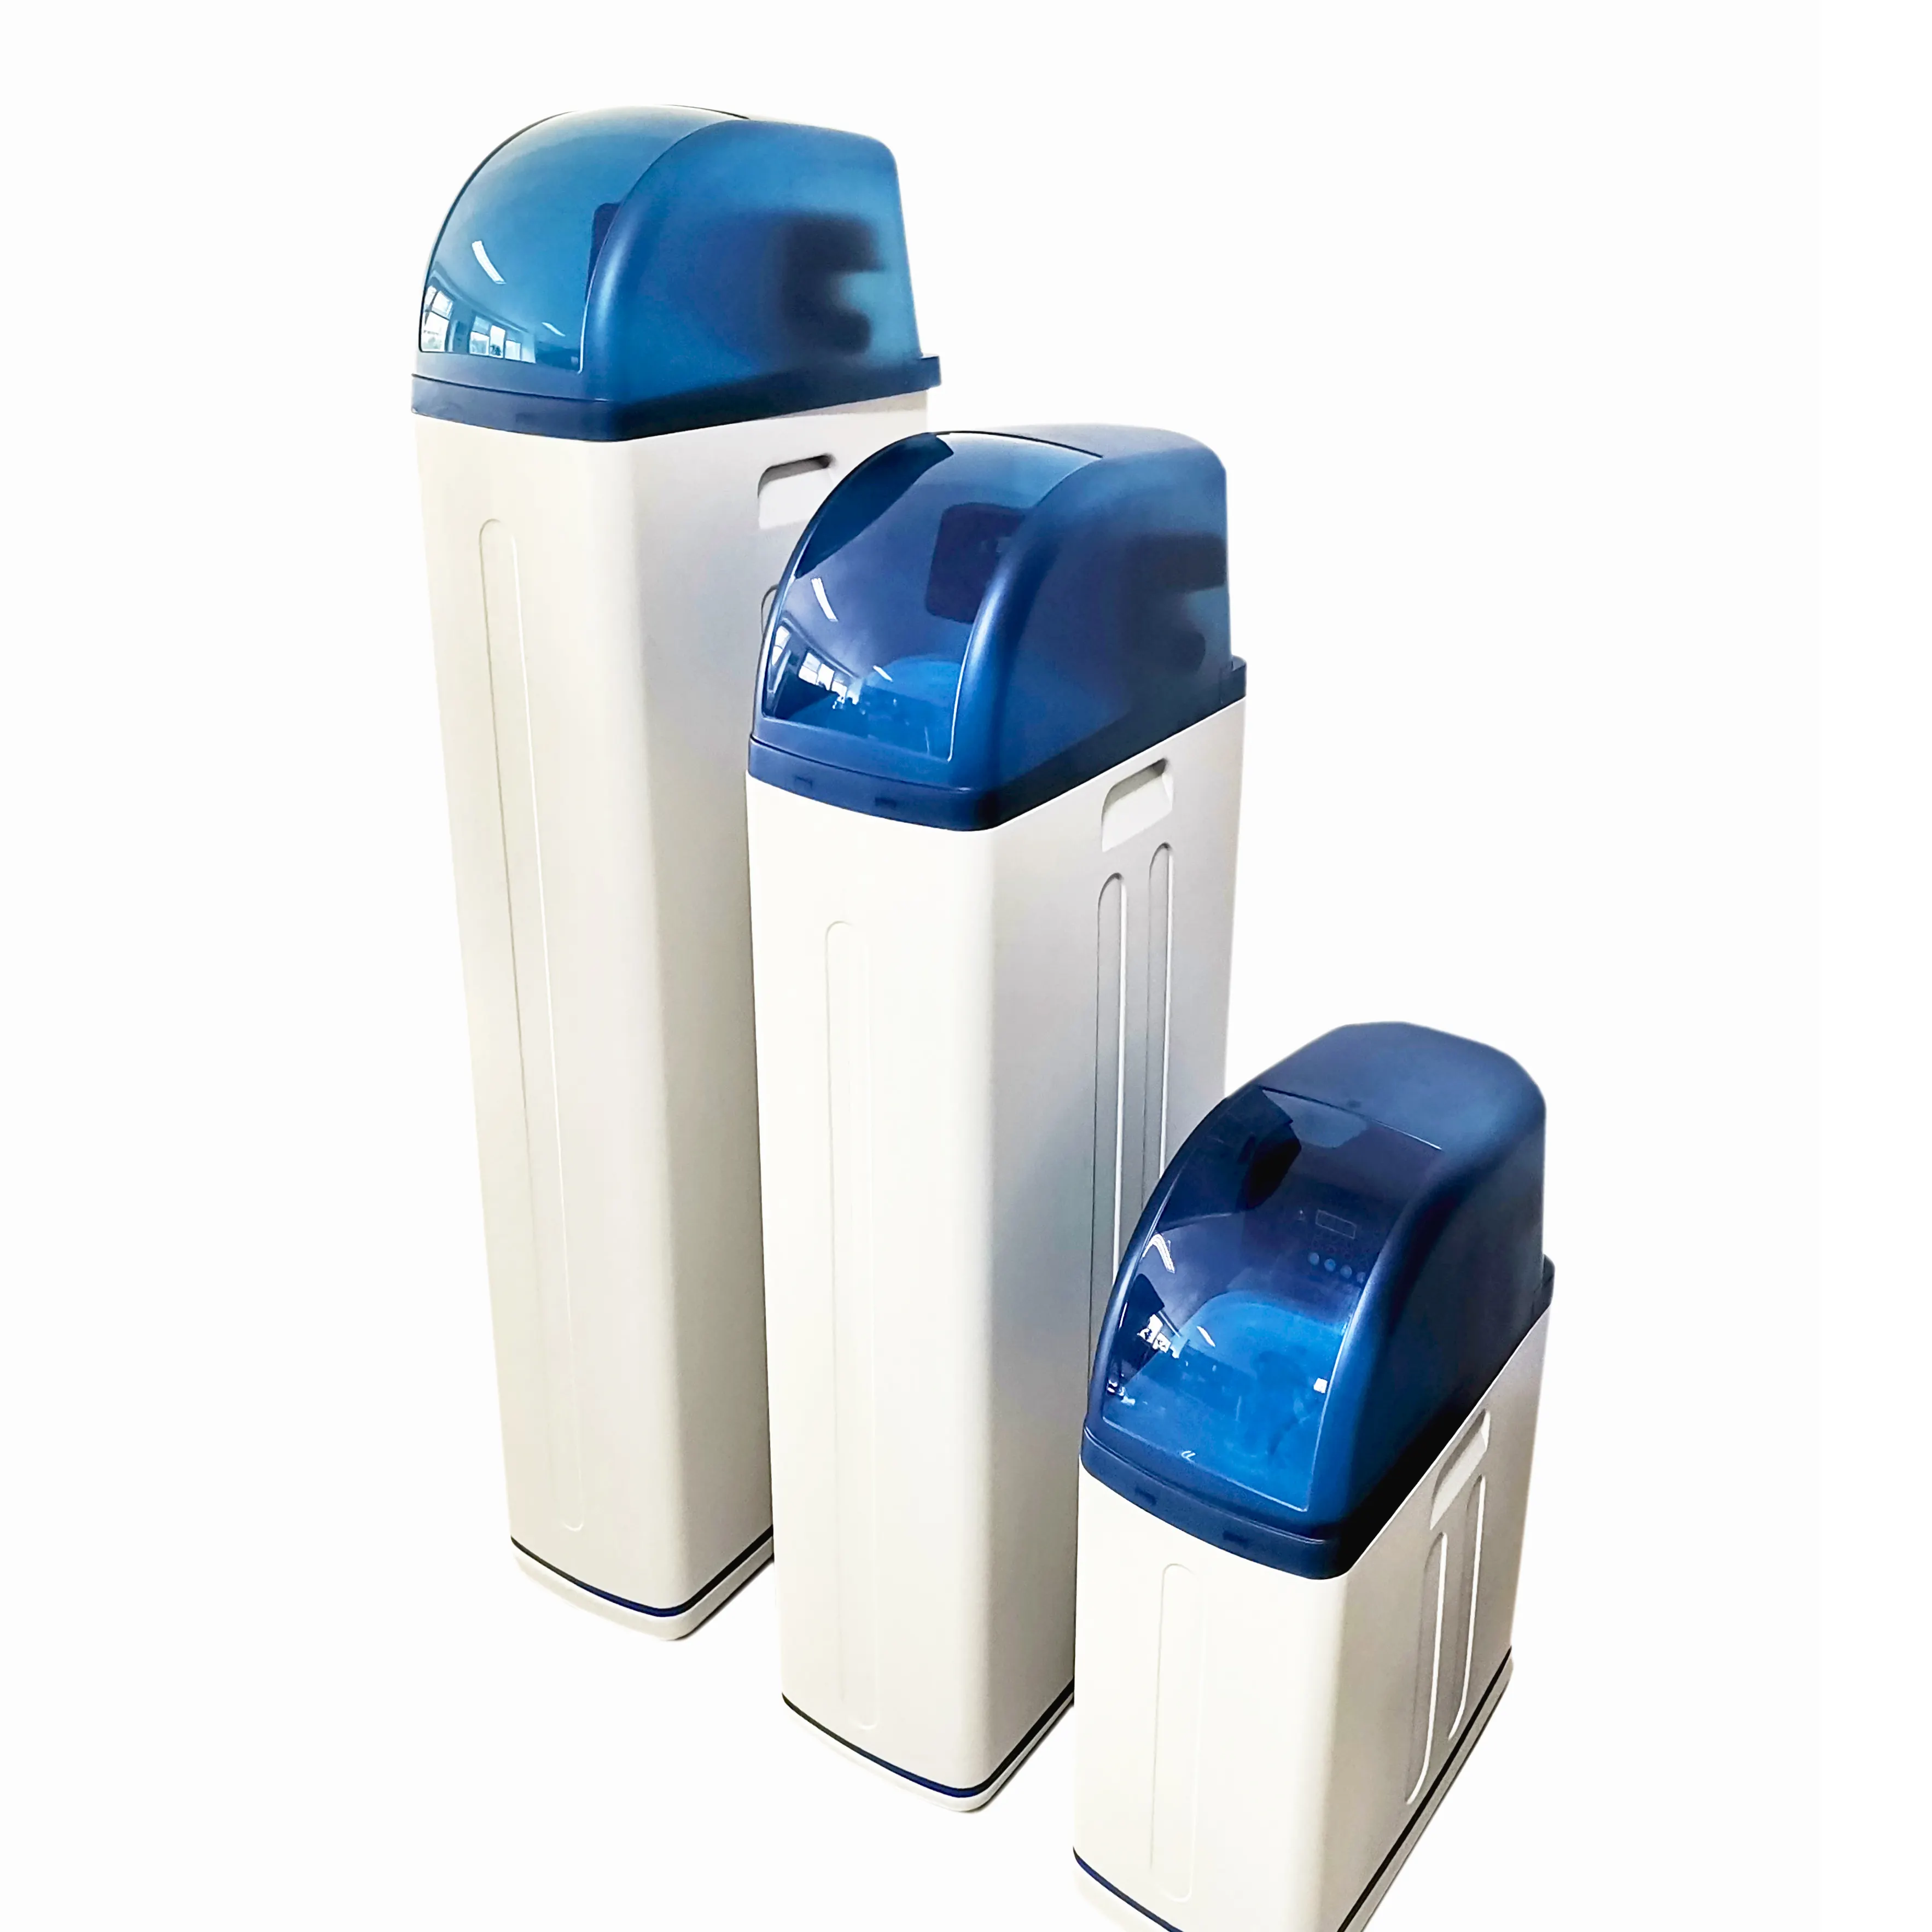 Amolador de água doméstico, removedor de água doméstico com 500l, 1000l, 1500l, uso doméstico, fabricante